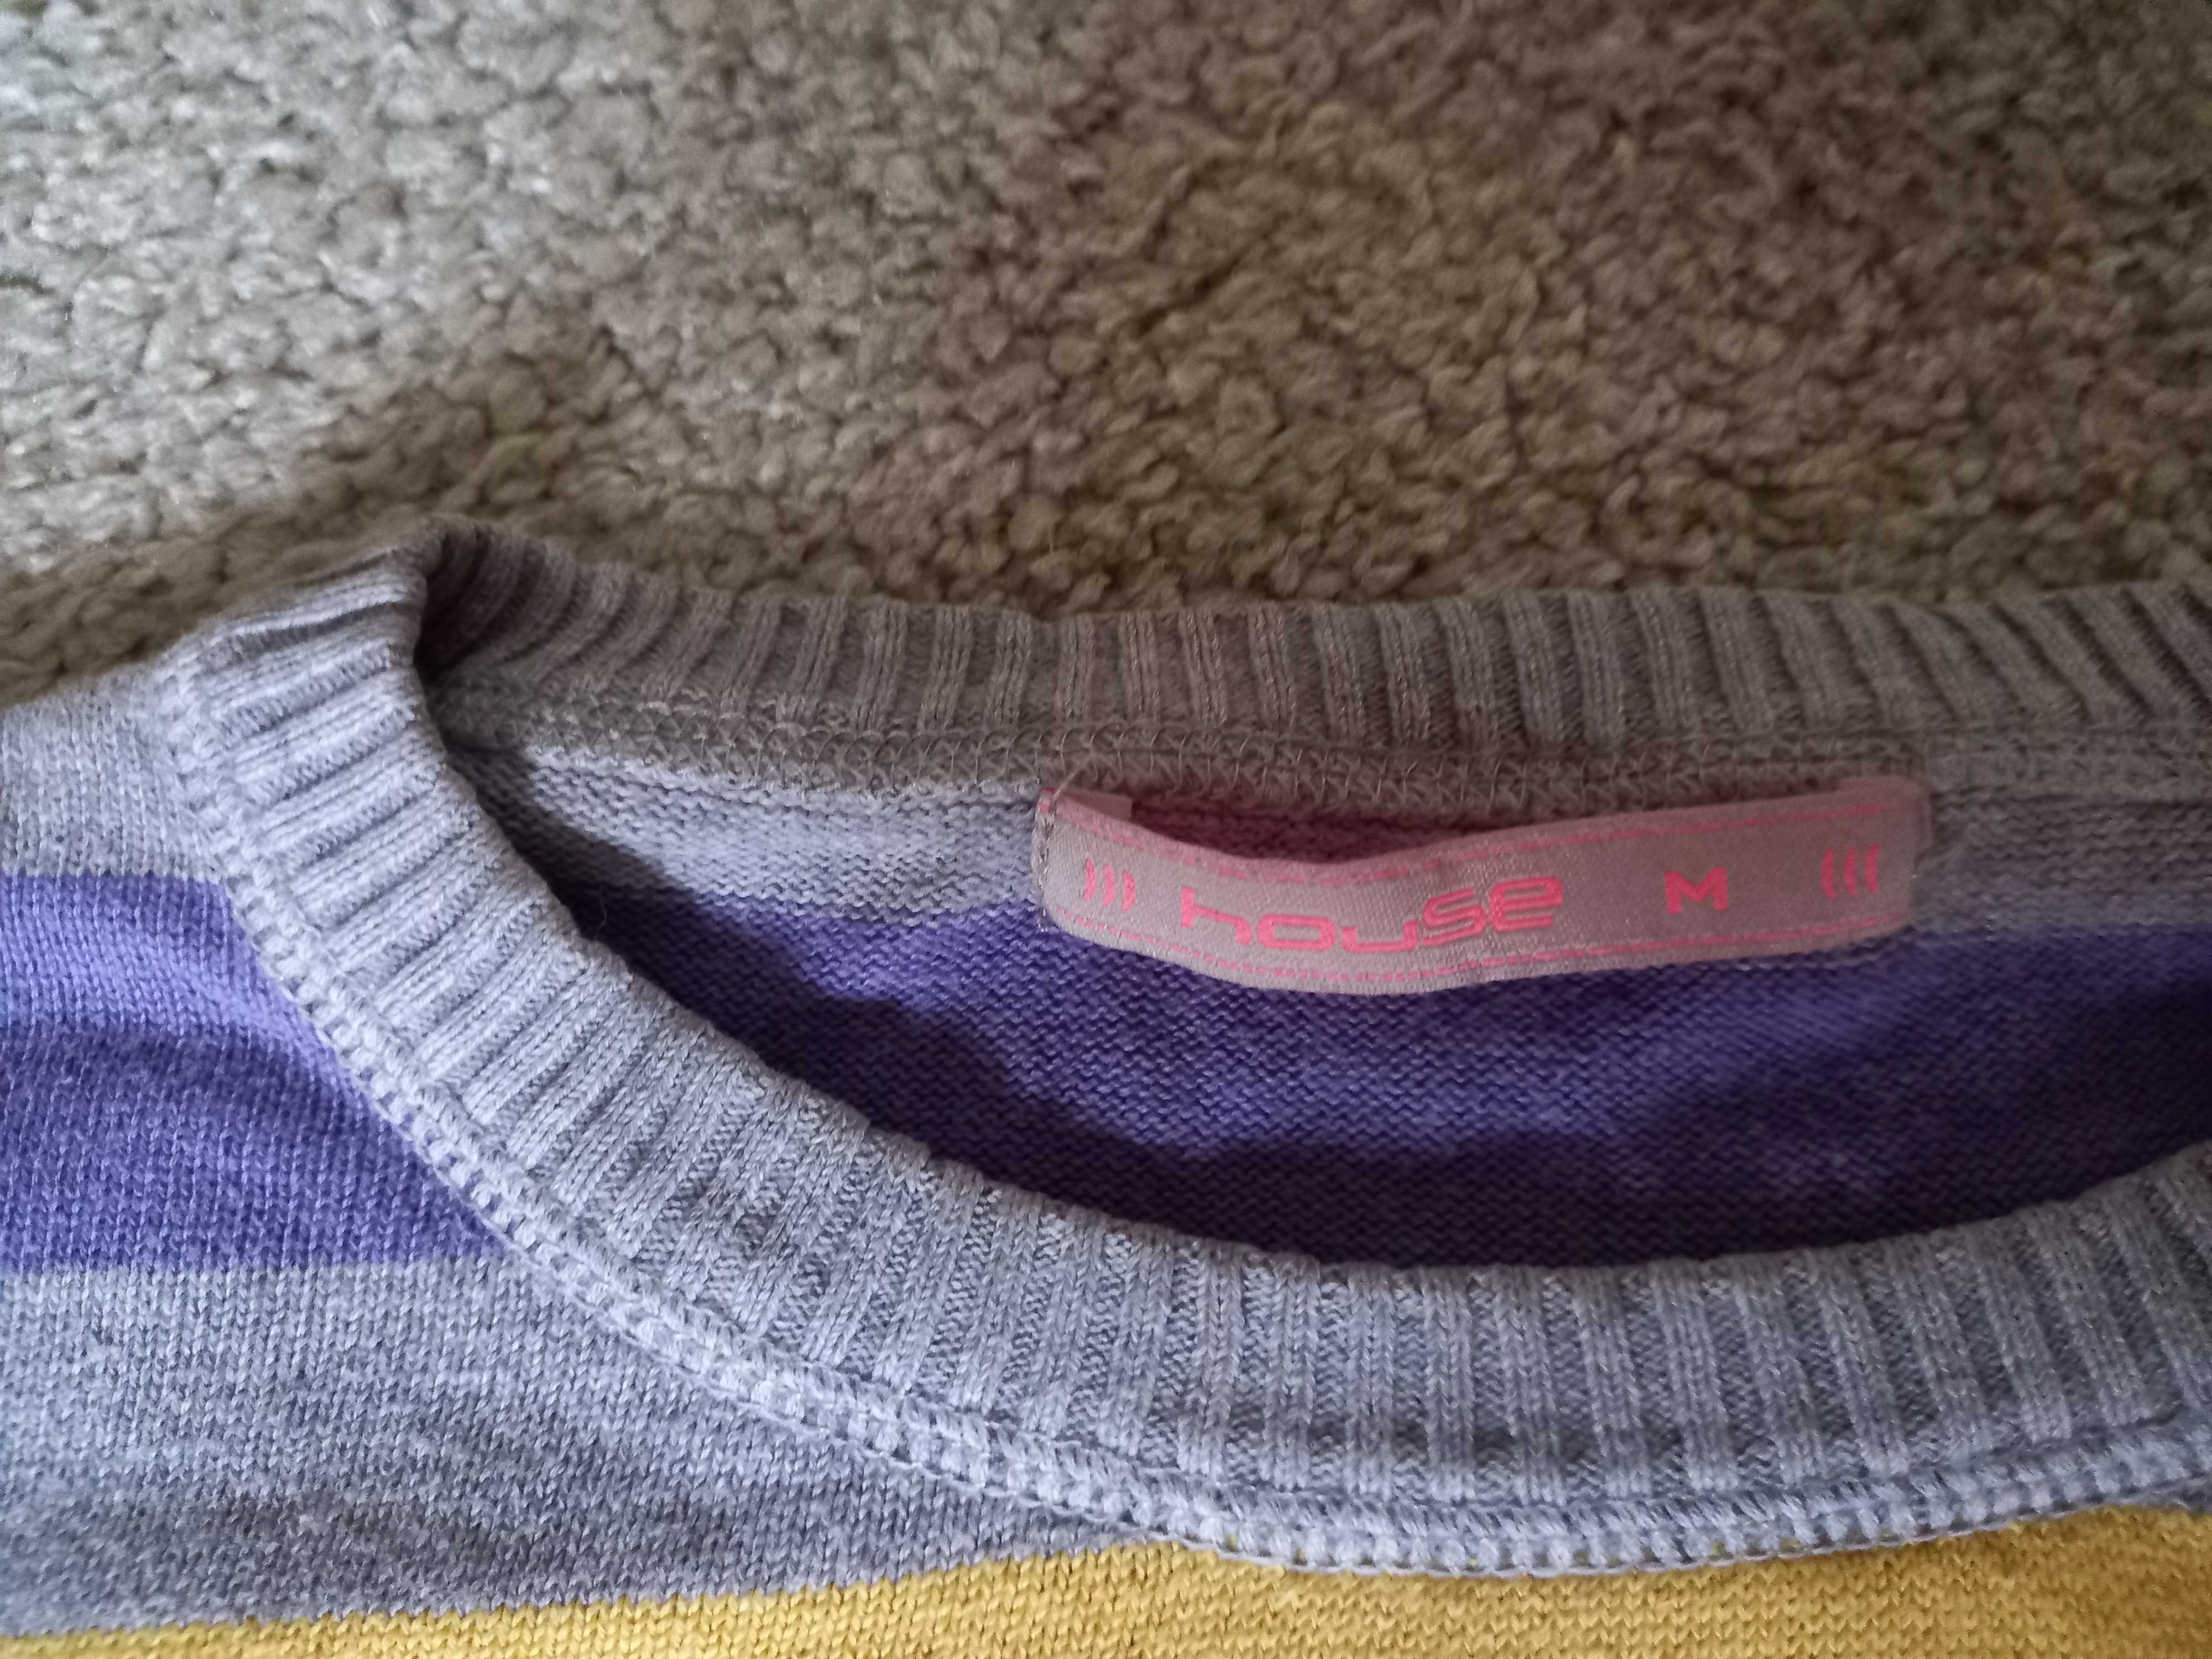 Damski sweterek, bluzka w paski House 38, M